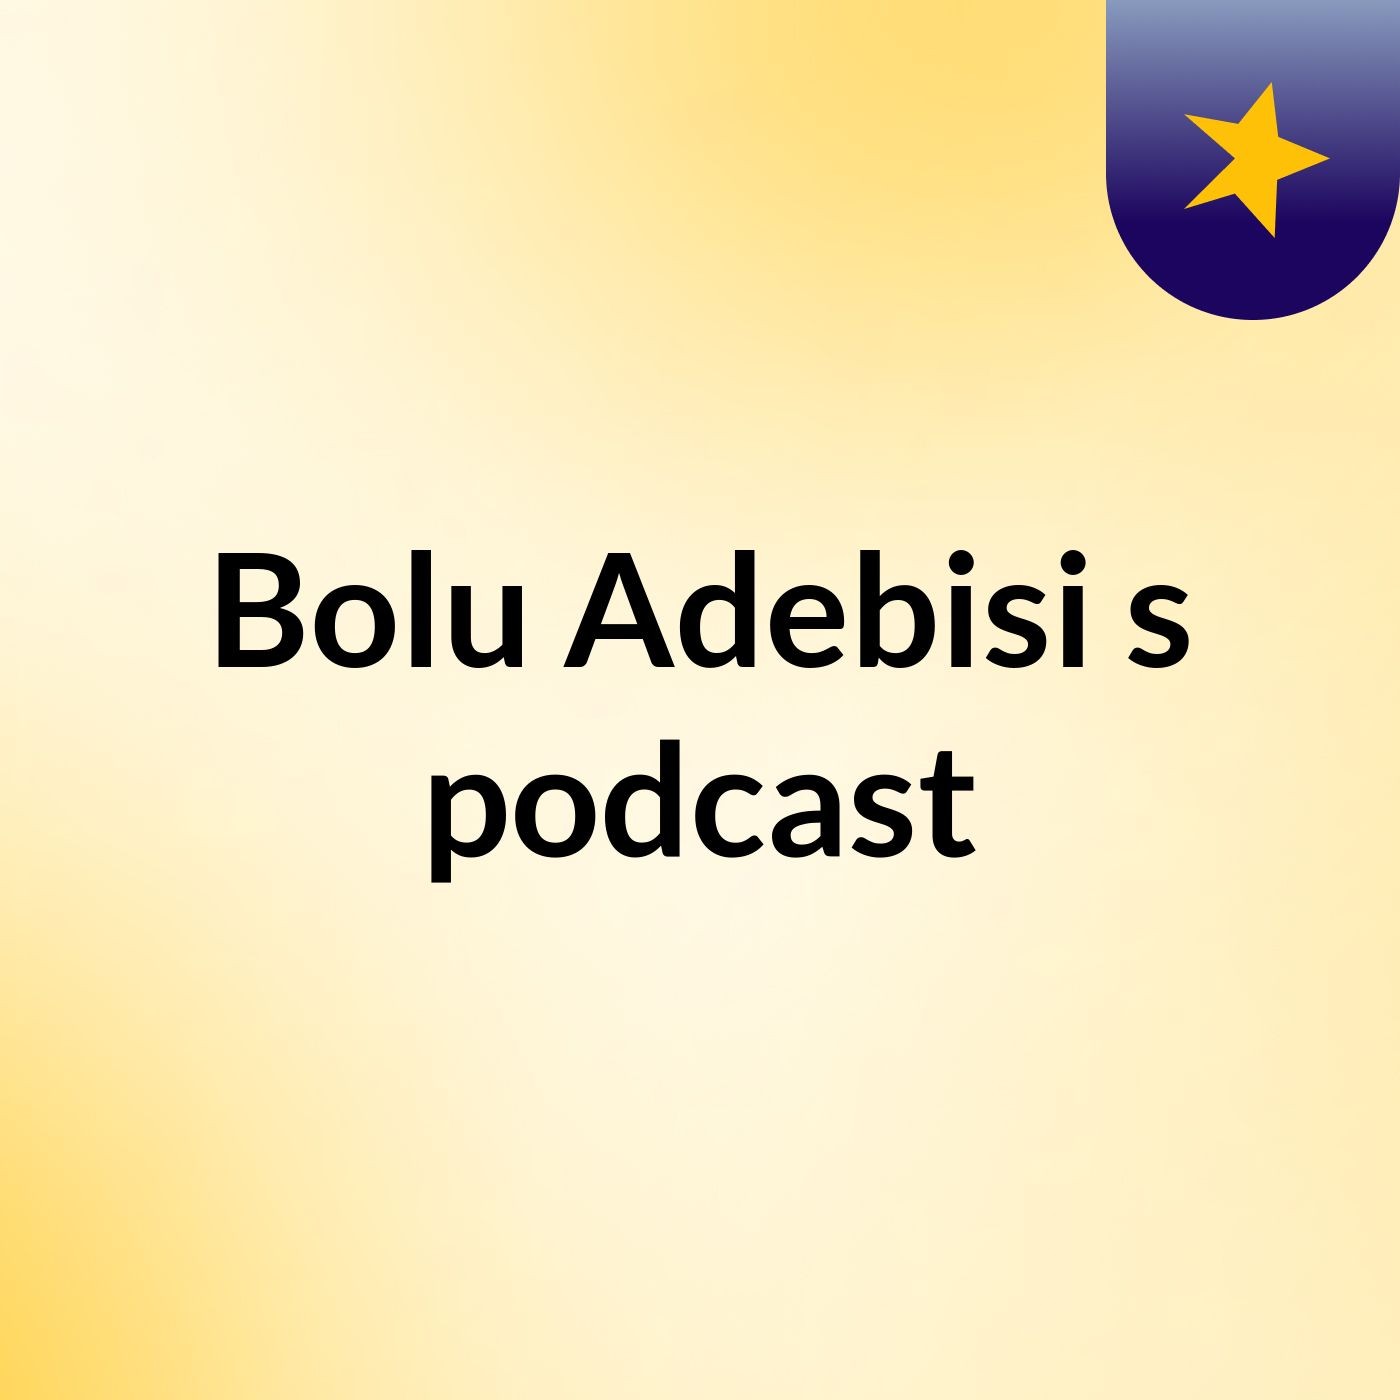 Bolu Adebisi's podcast